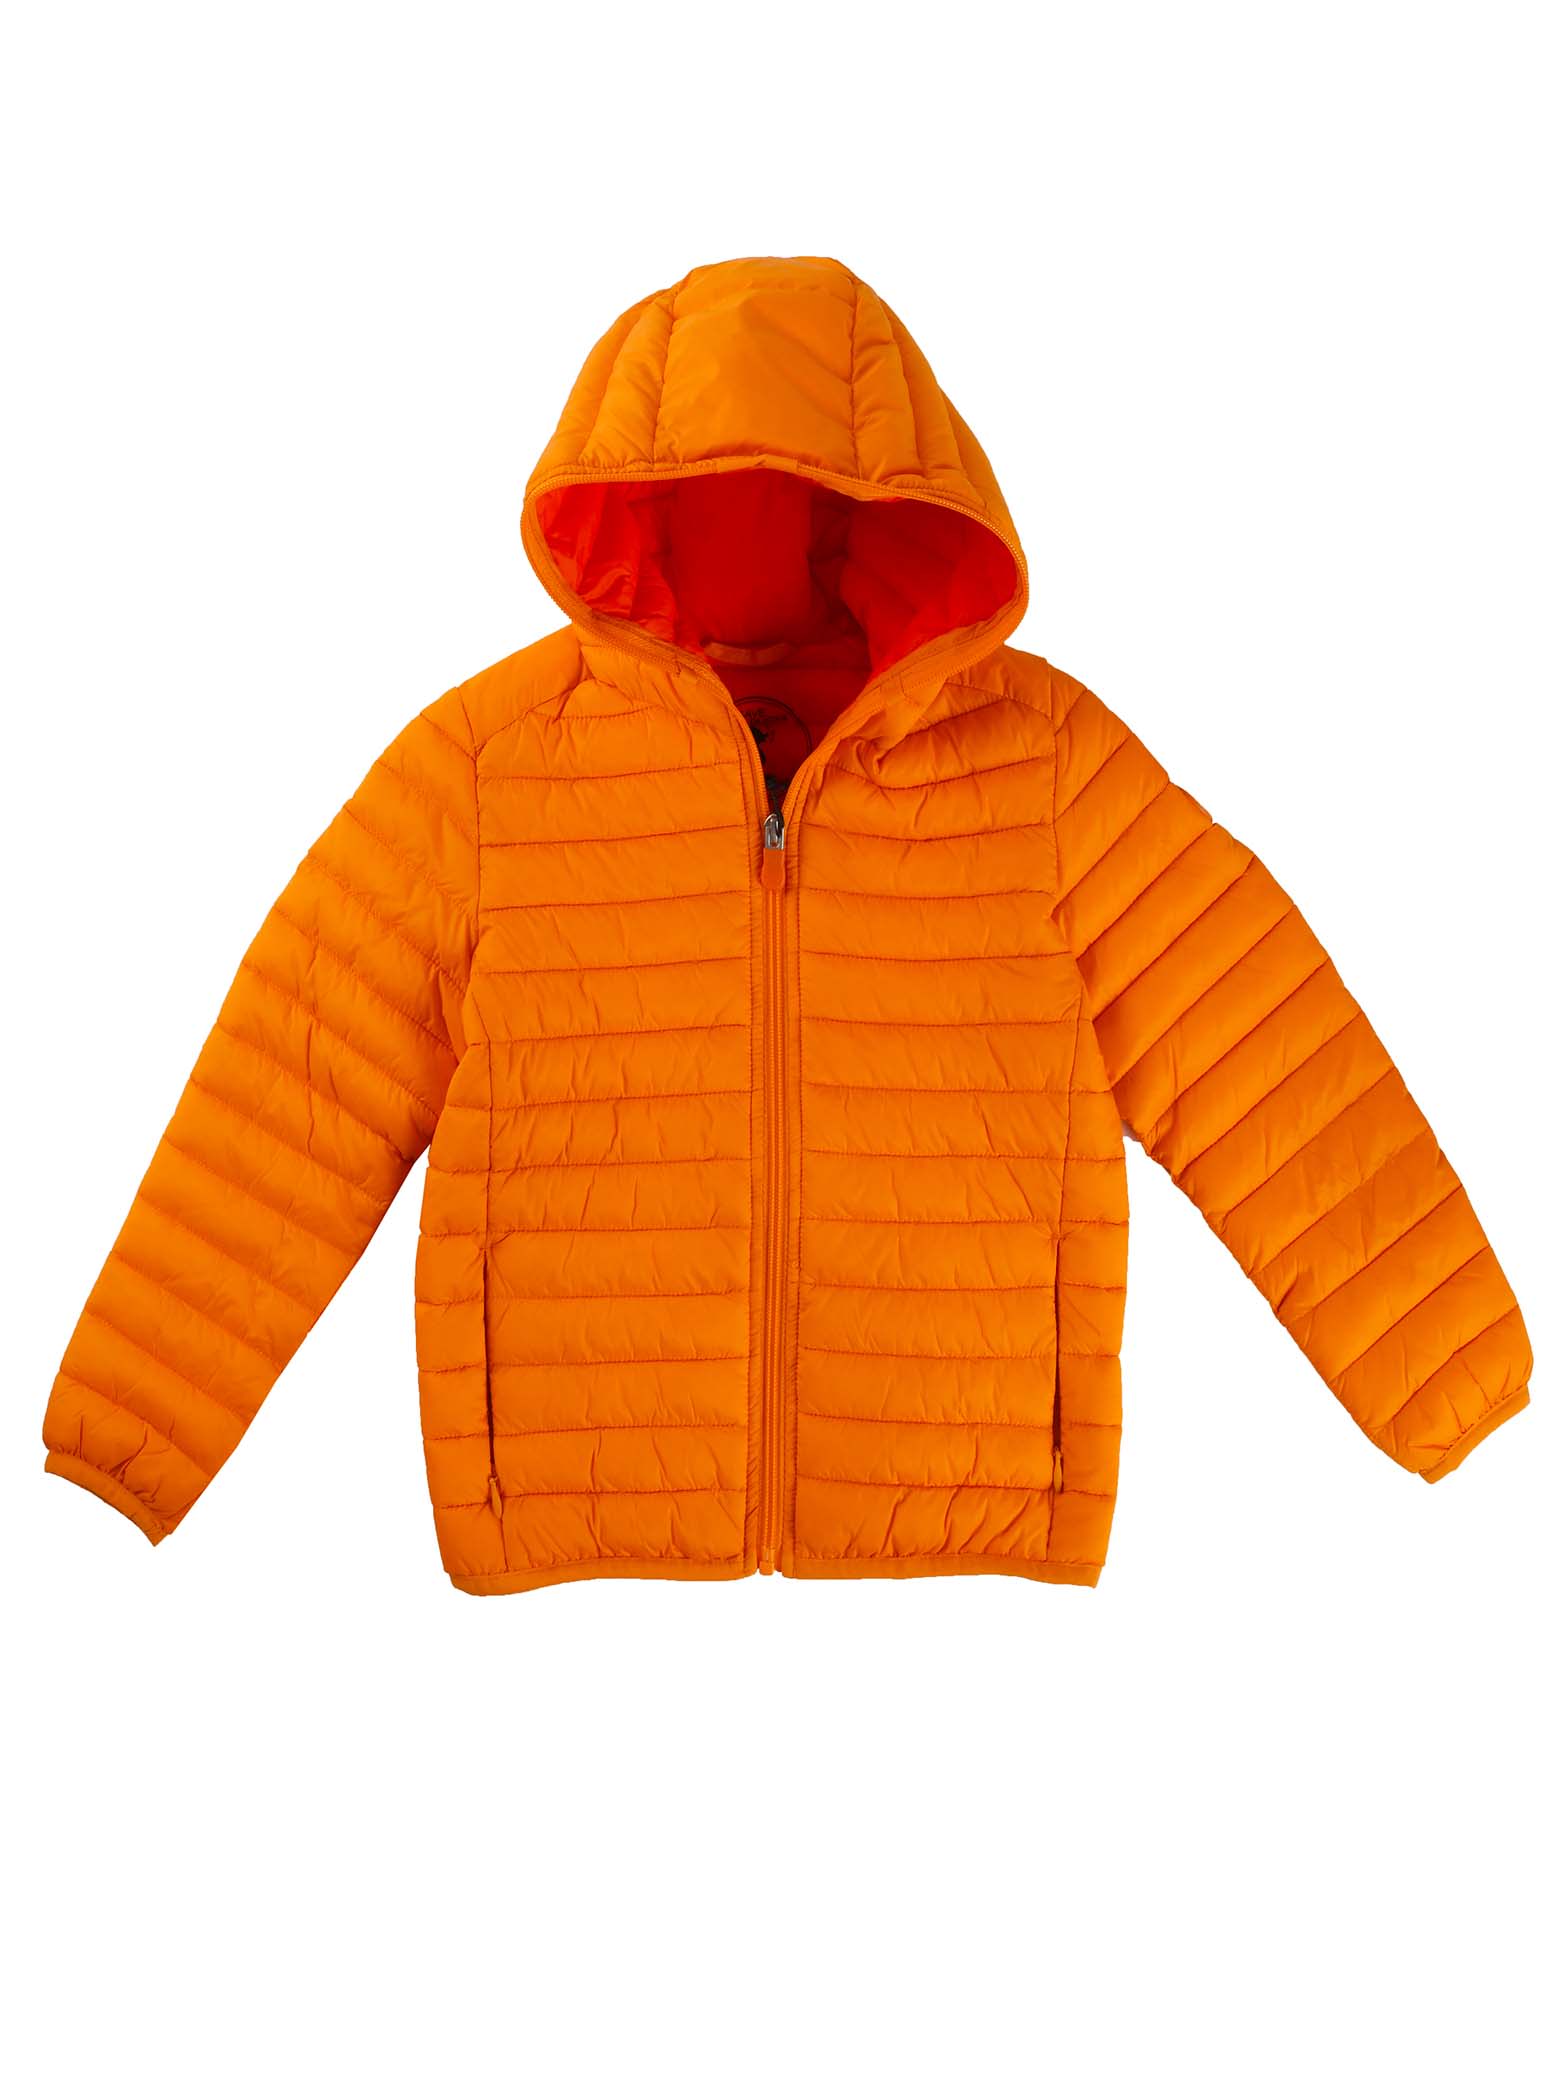 Save the Duck Jacket With Orange Hood